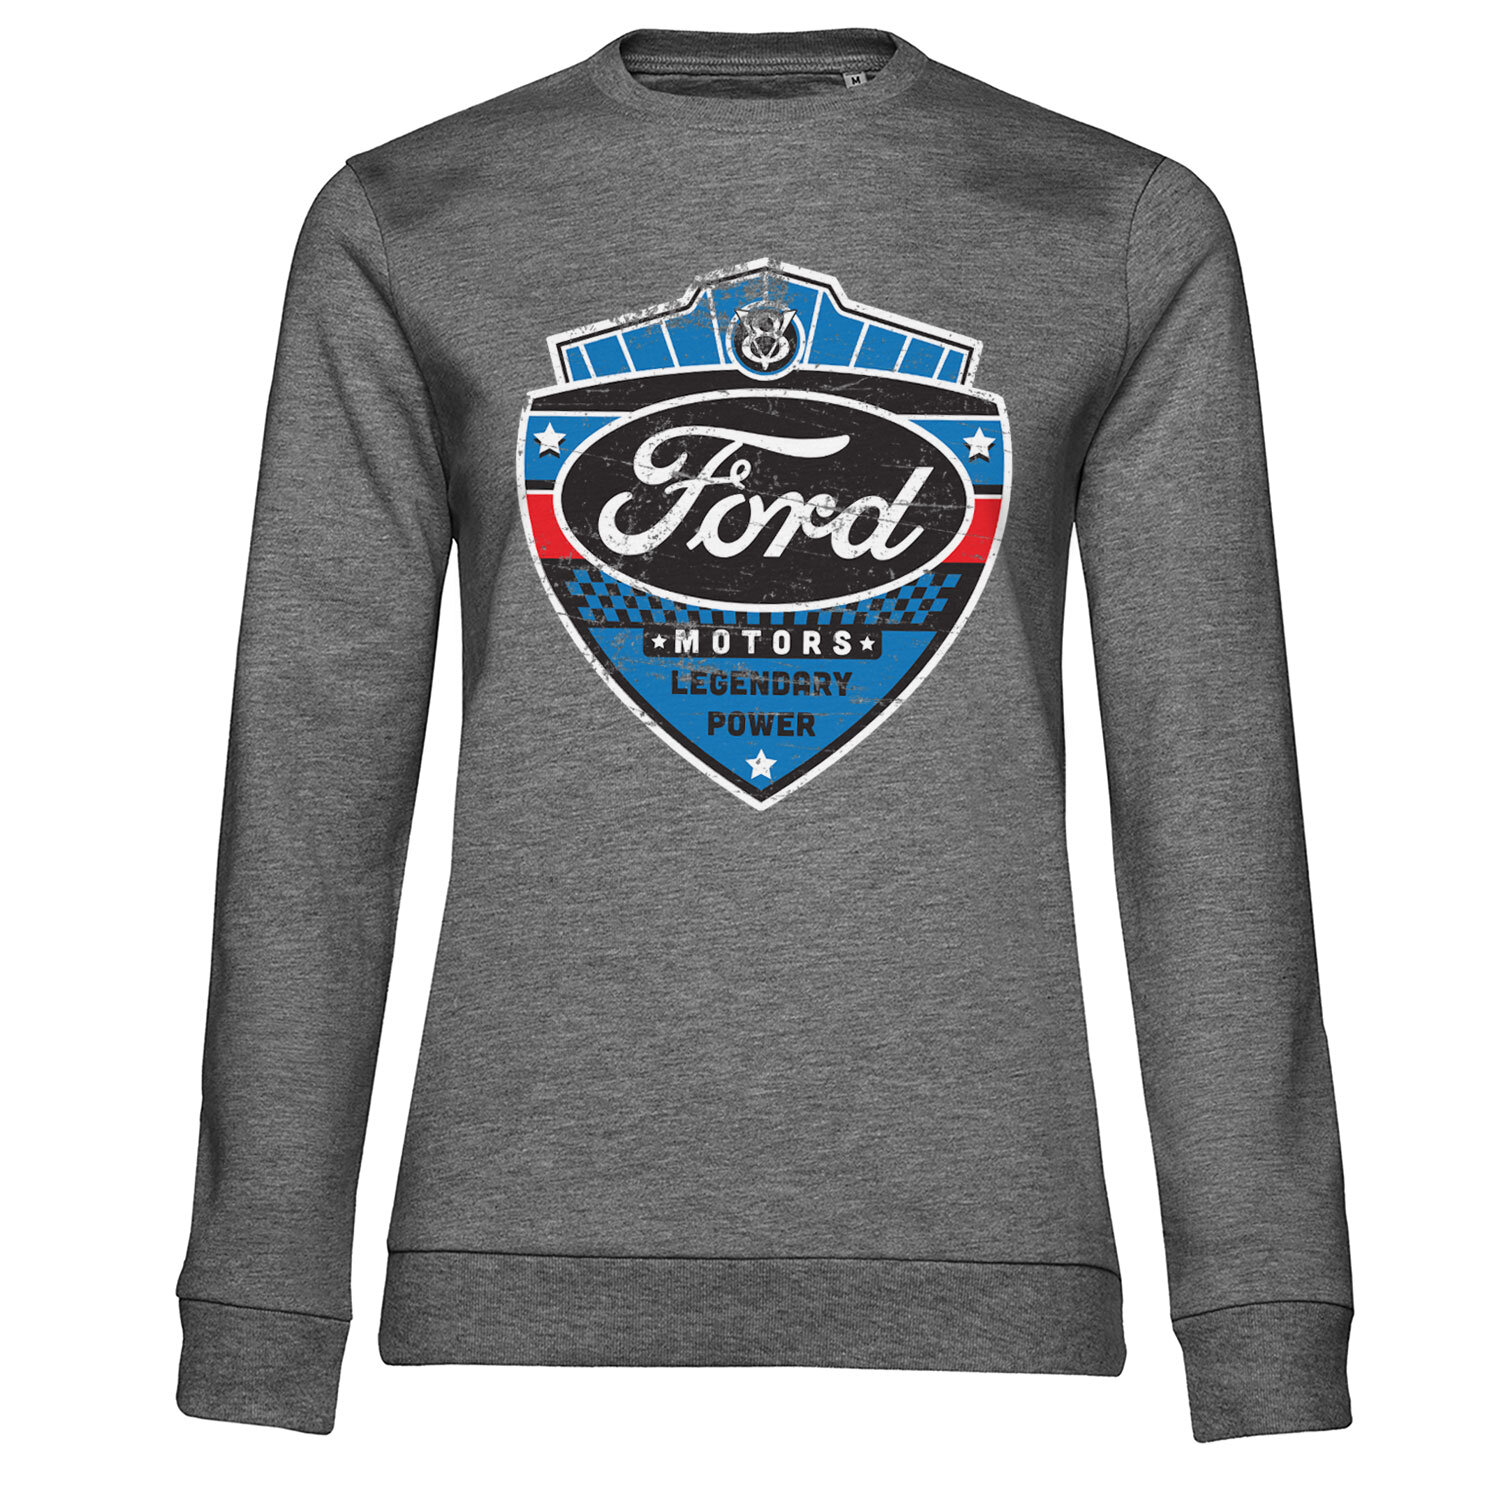 Ford - Legendary Power Girly Sweatshirt